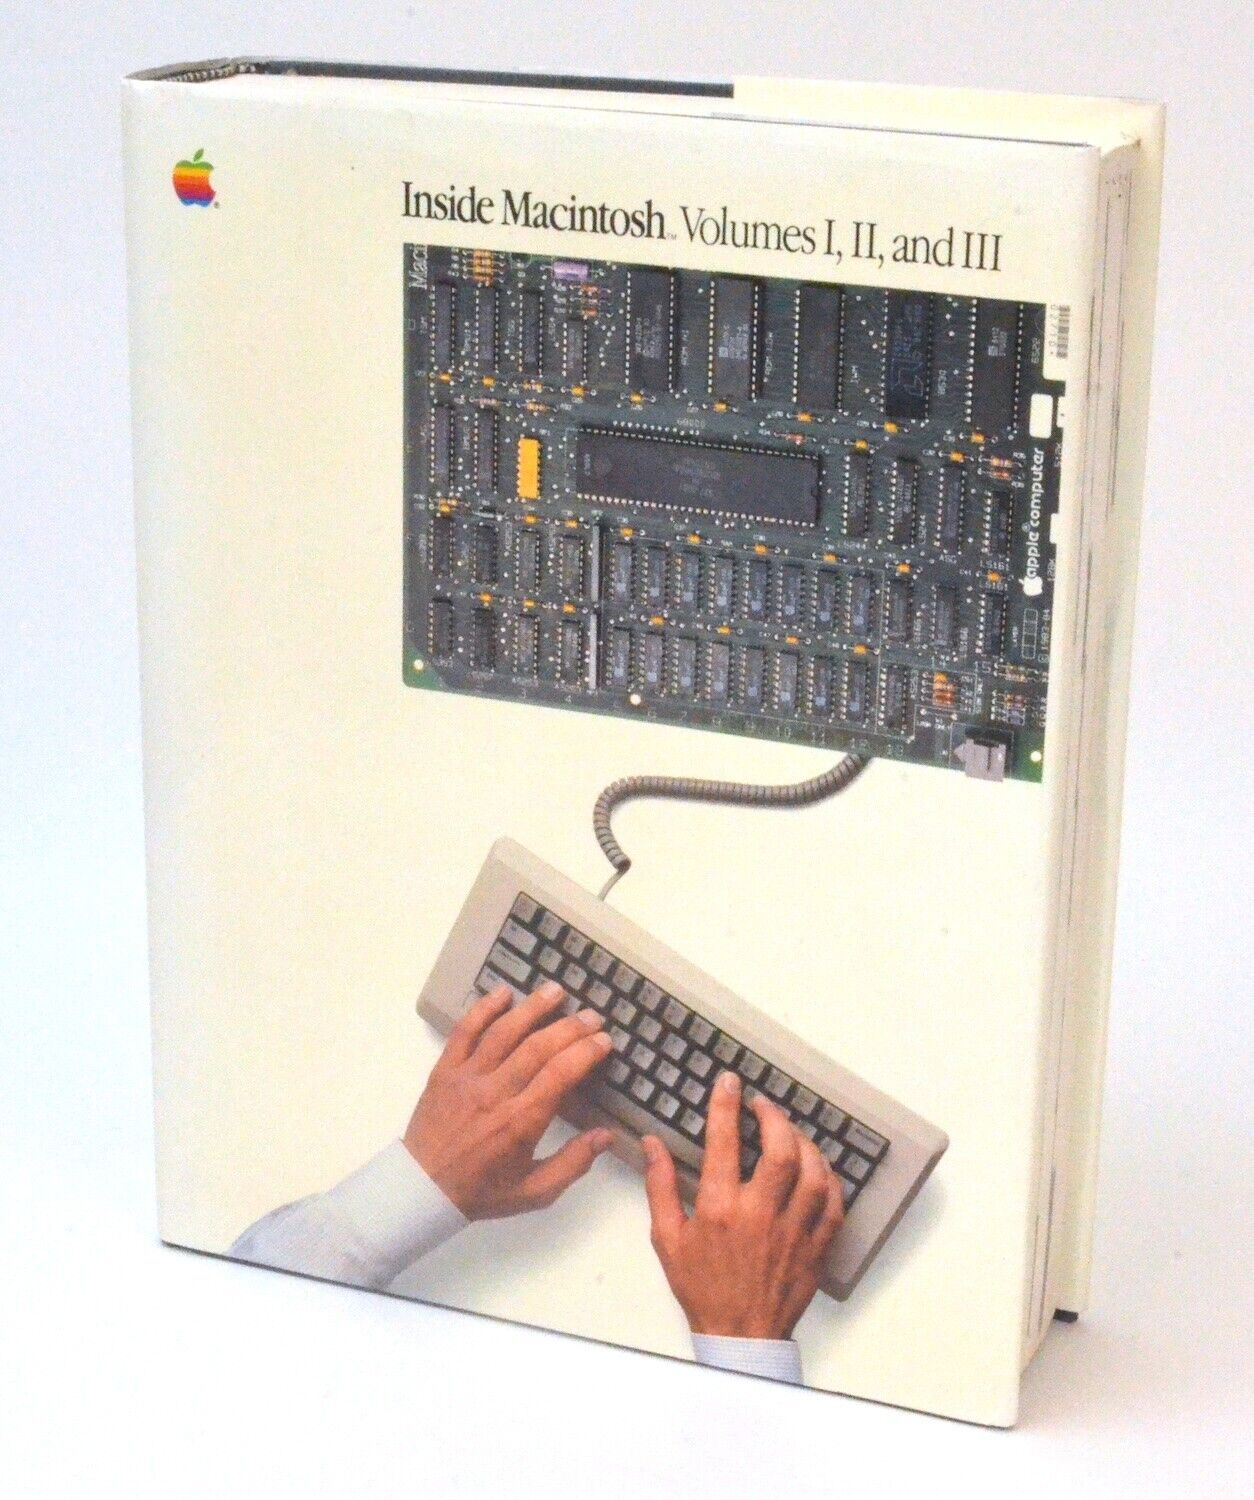 Inside Macintosh, Volumes I, II, III, Hardcover, 1985, 500+Pages *Used, Vintage*